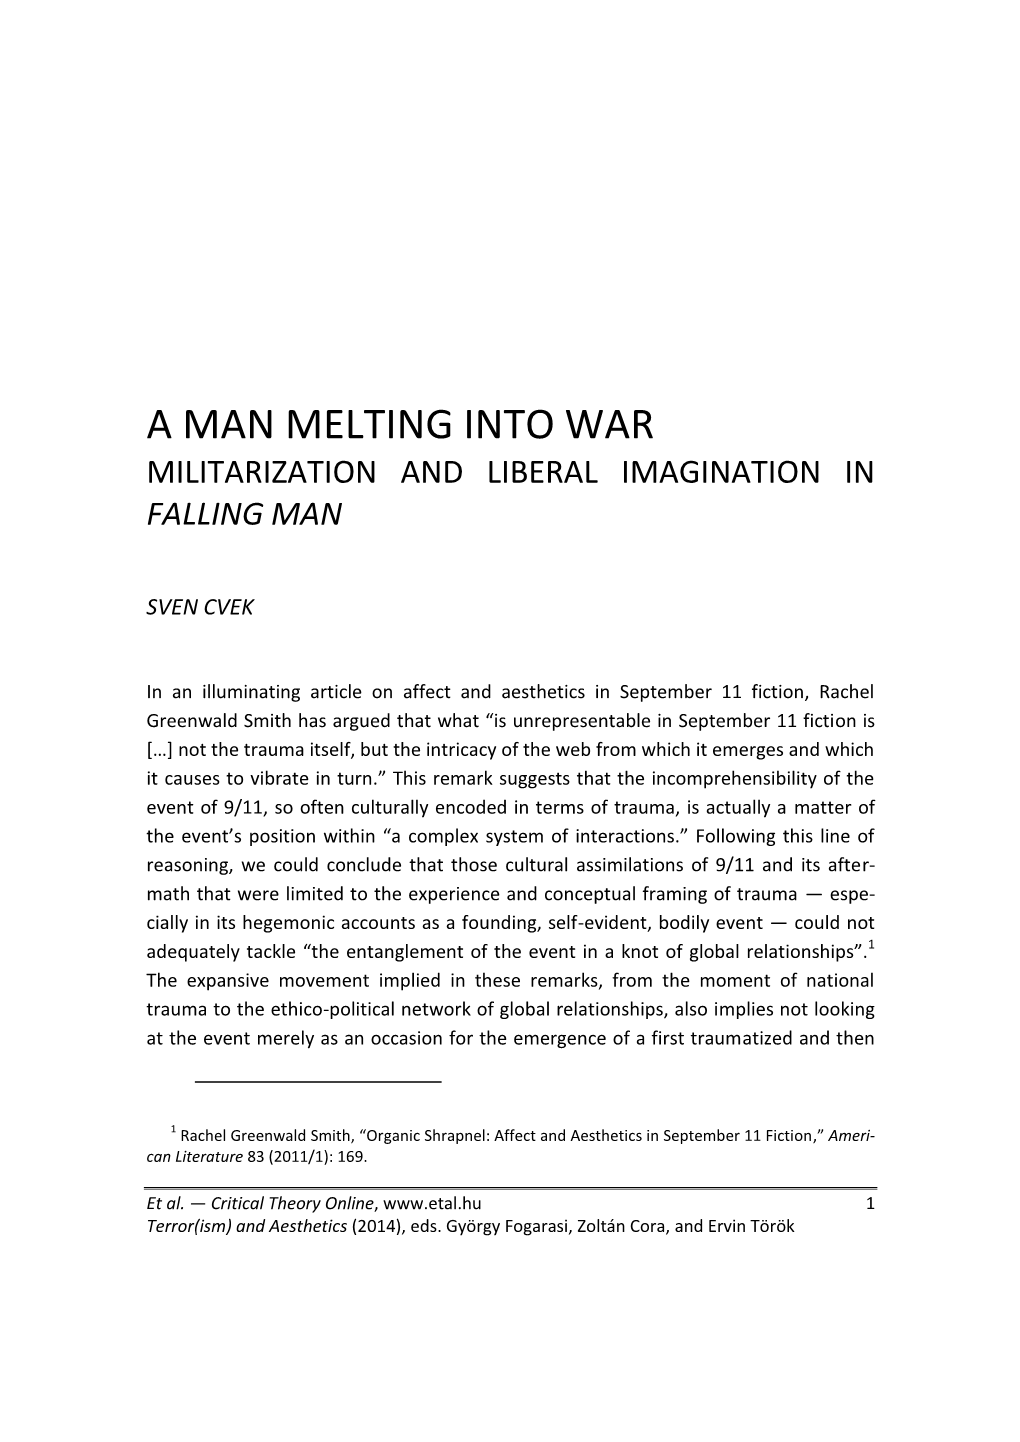 A Man Melting Into War Militarization and Liberal Imagination in Falling Man